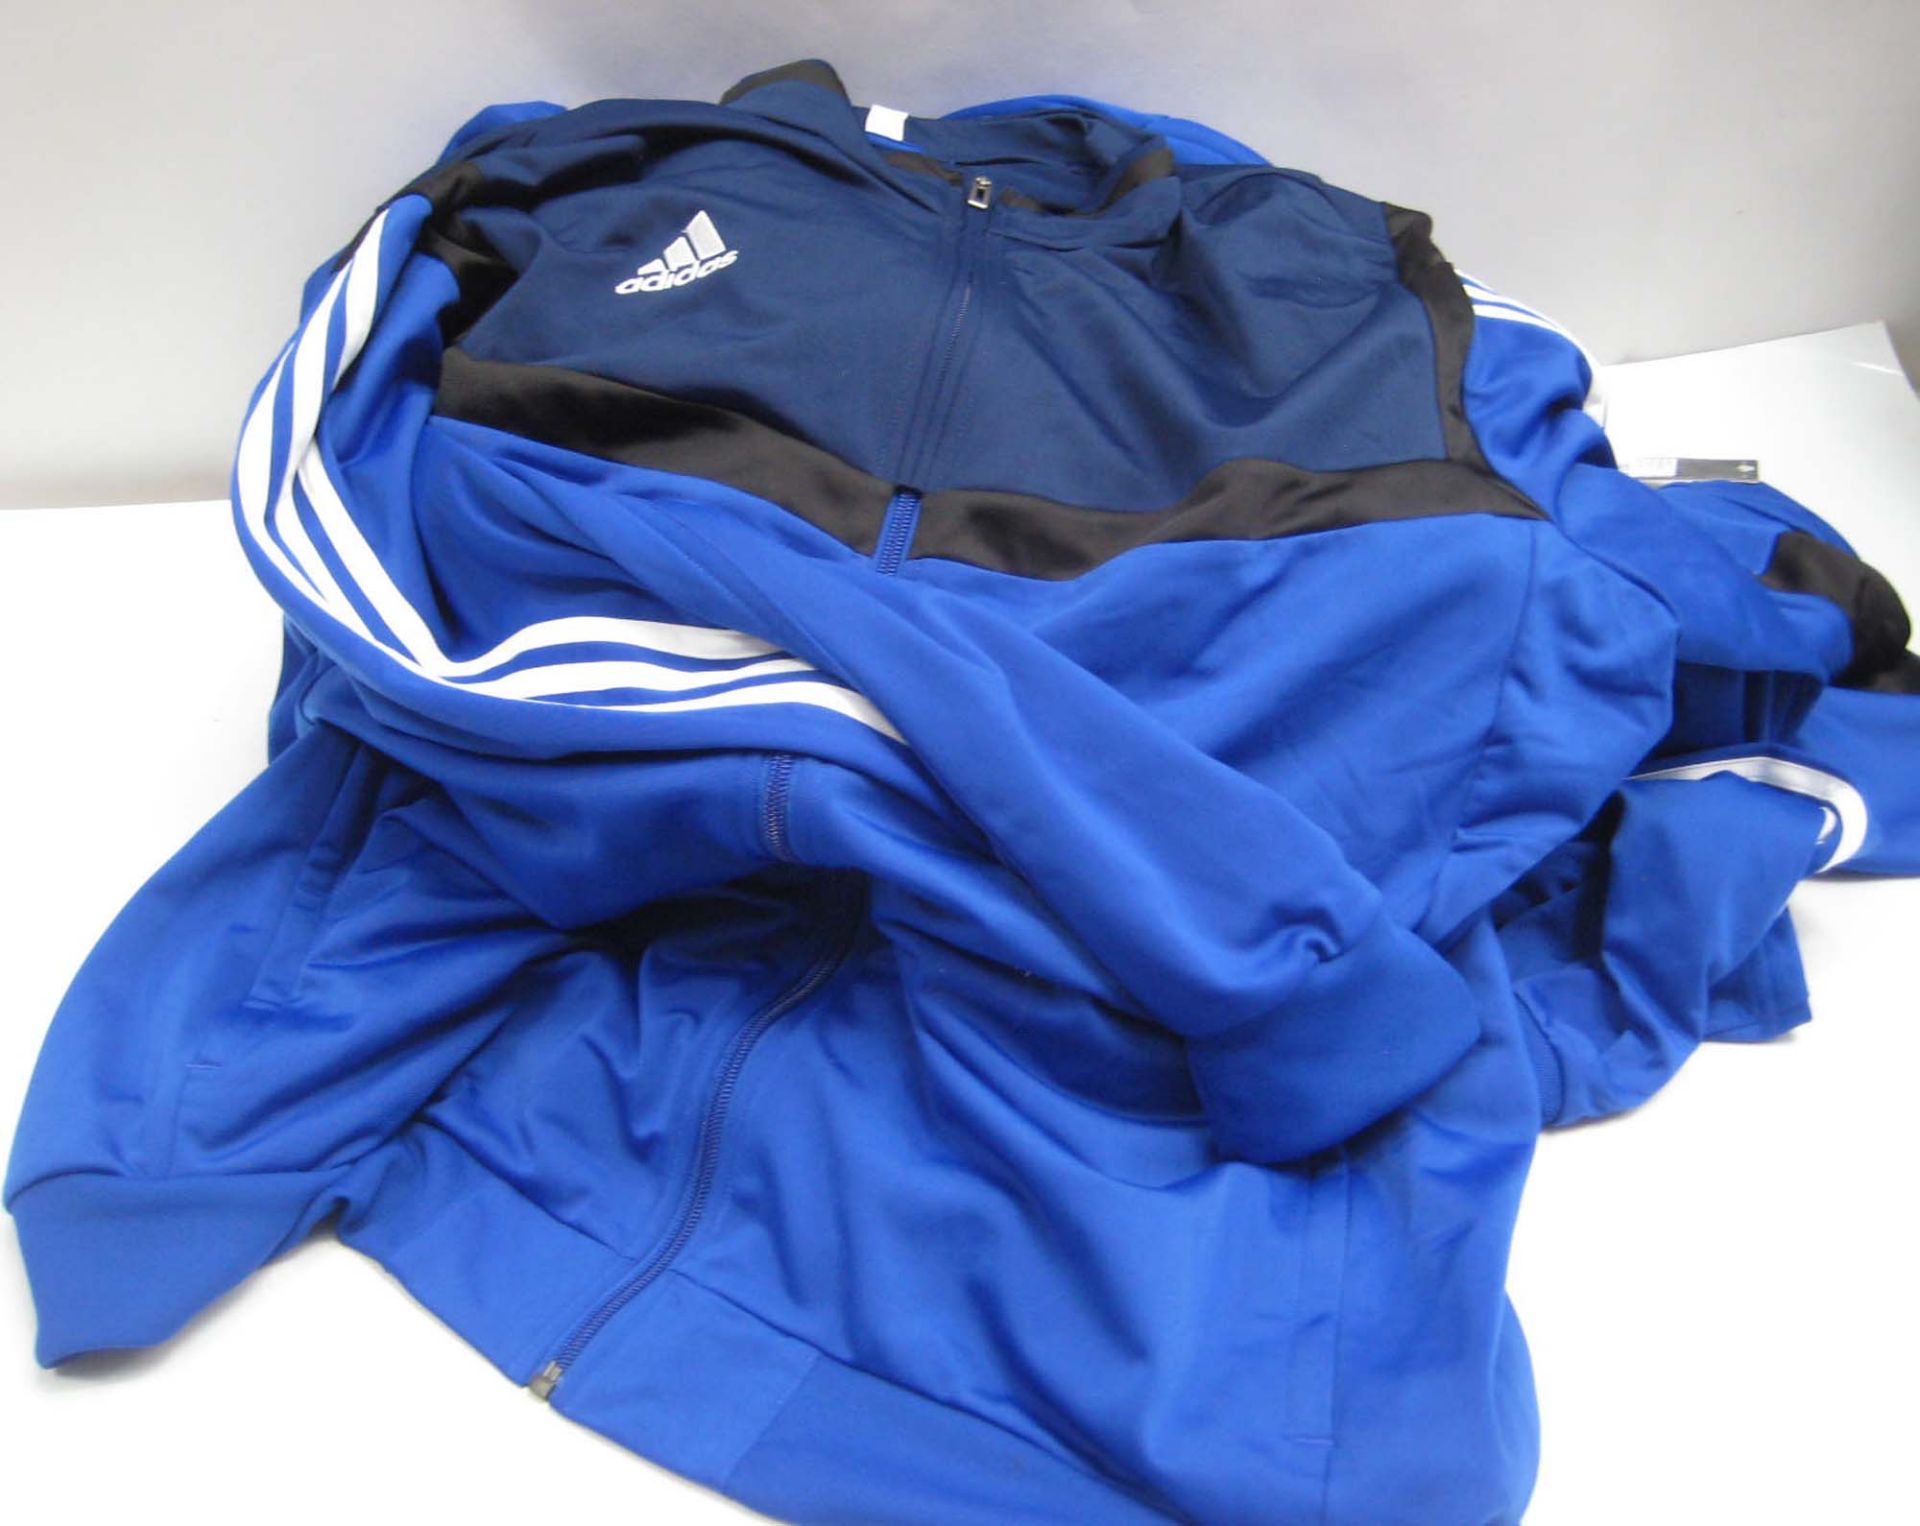 10 Royal Blue Adidas sports tops (fully zipped)